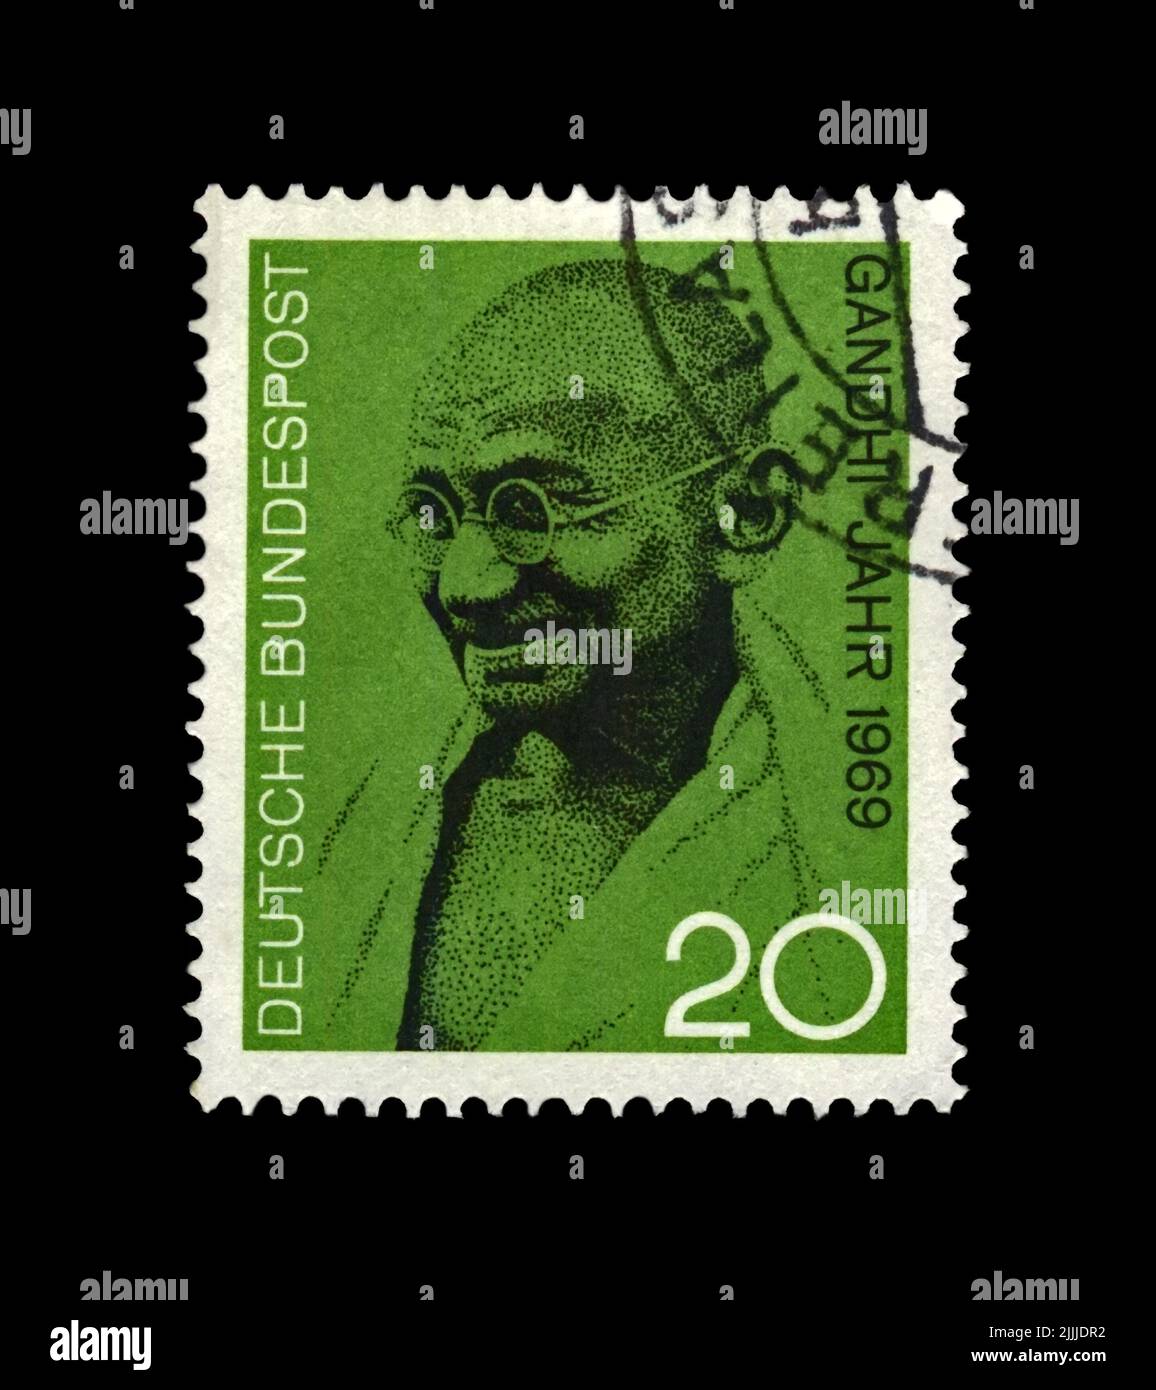 Mahatma Gandhi (1869-1948) aka Mohandas Karamchand Gandhi, famous indian activist, canceled stamp printed in Germany Stock Photo